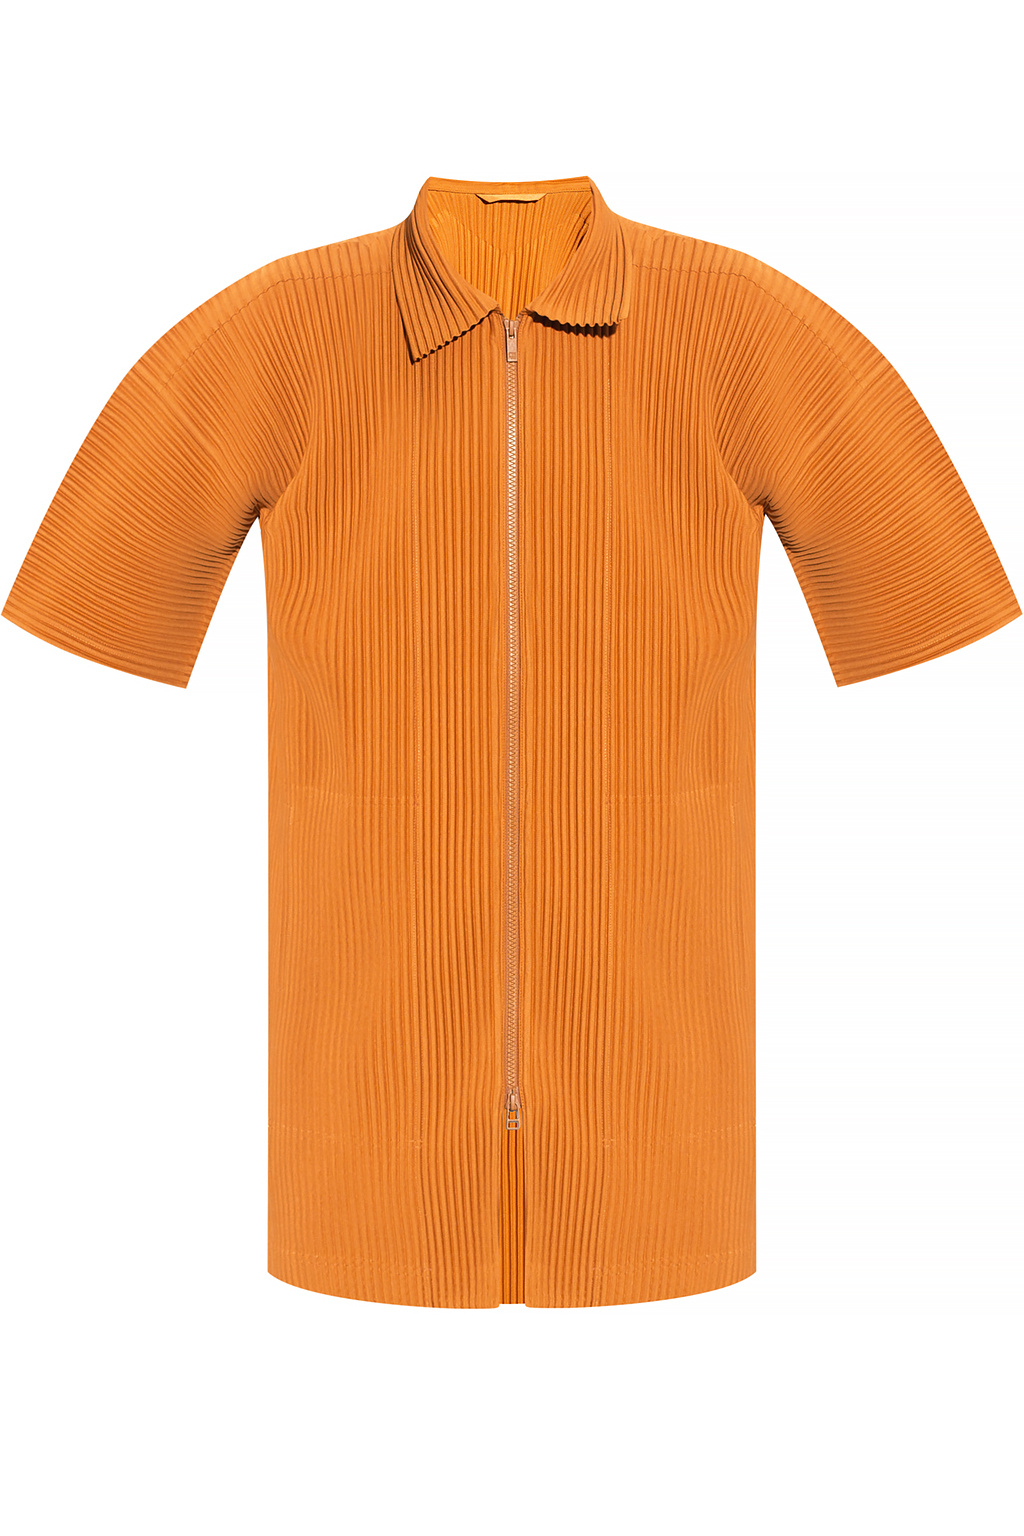 Issey Miyake Homme Plisse Pleated shirt | Men's Clothing | Vitkac